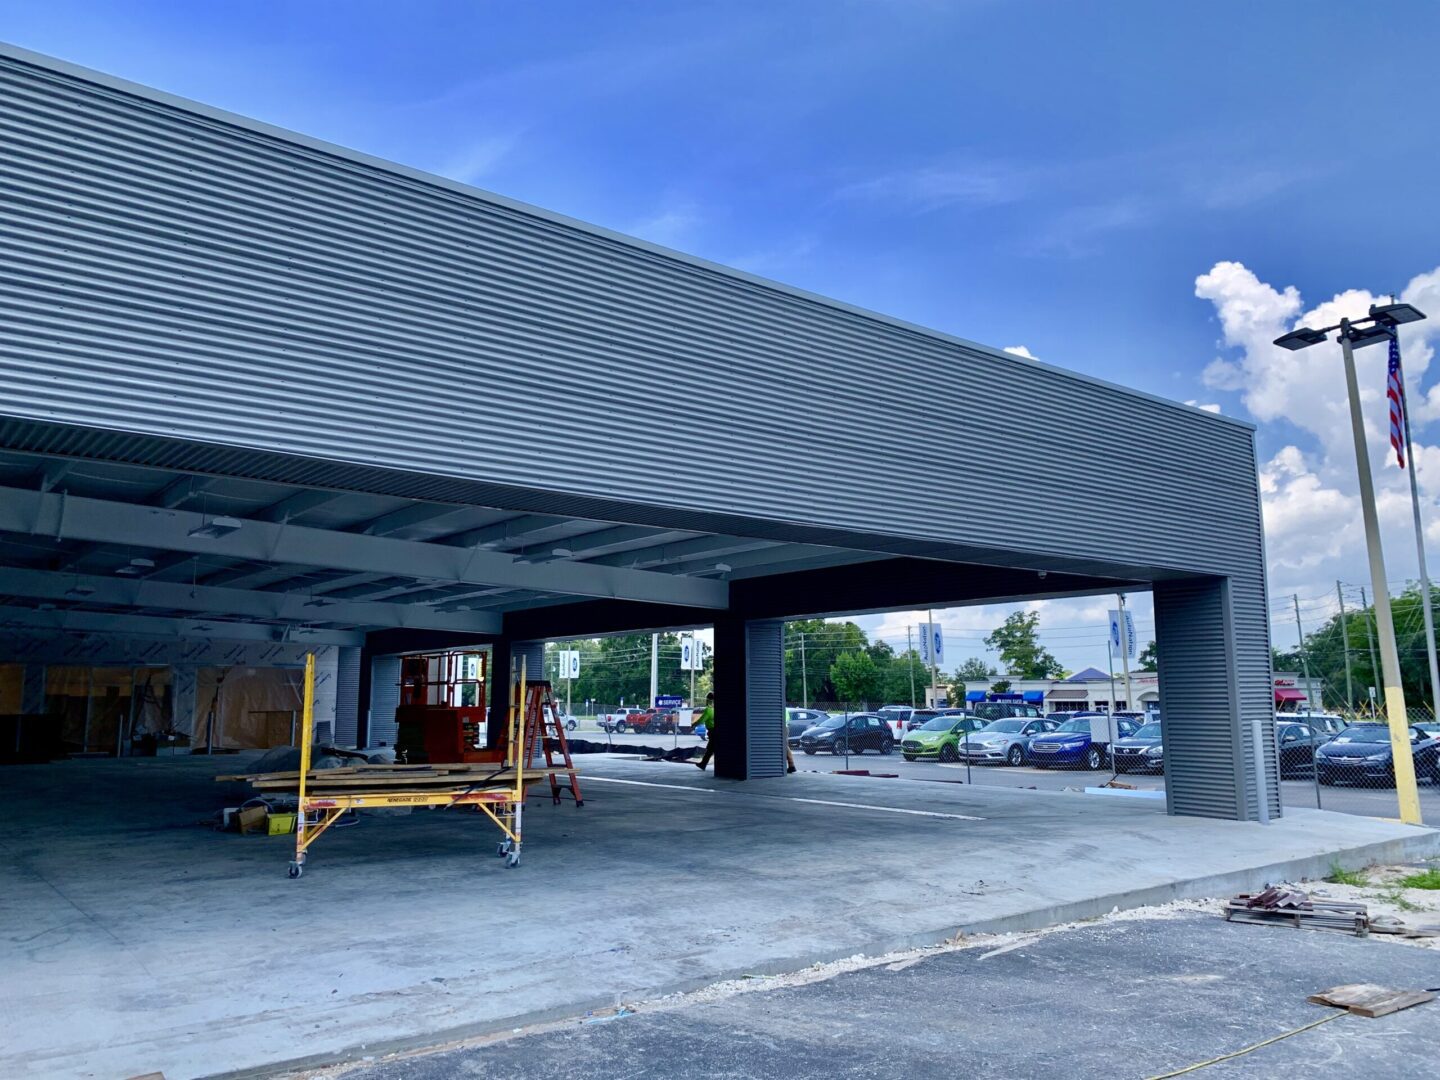 A large open parking garage under a blue sky.